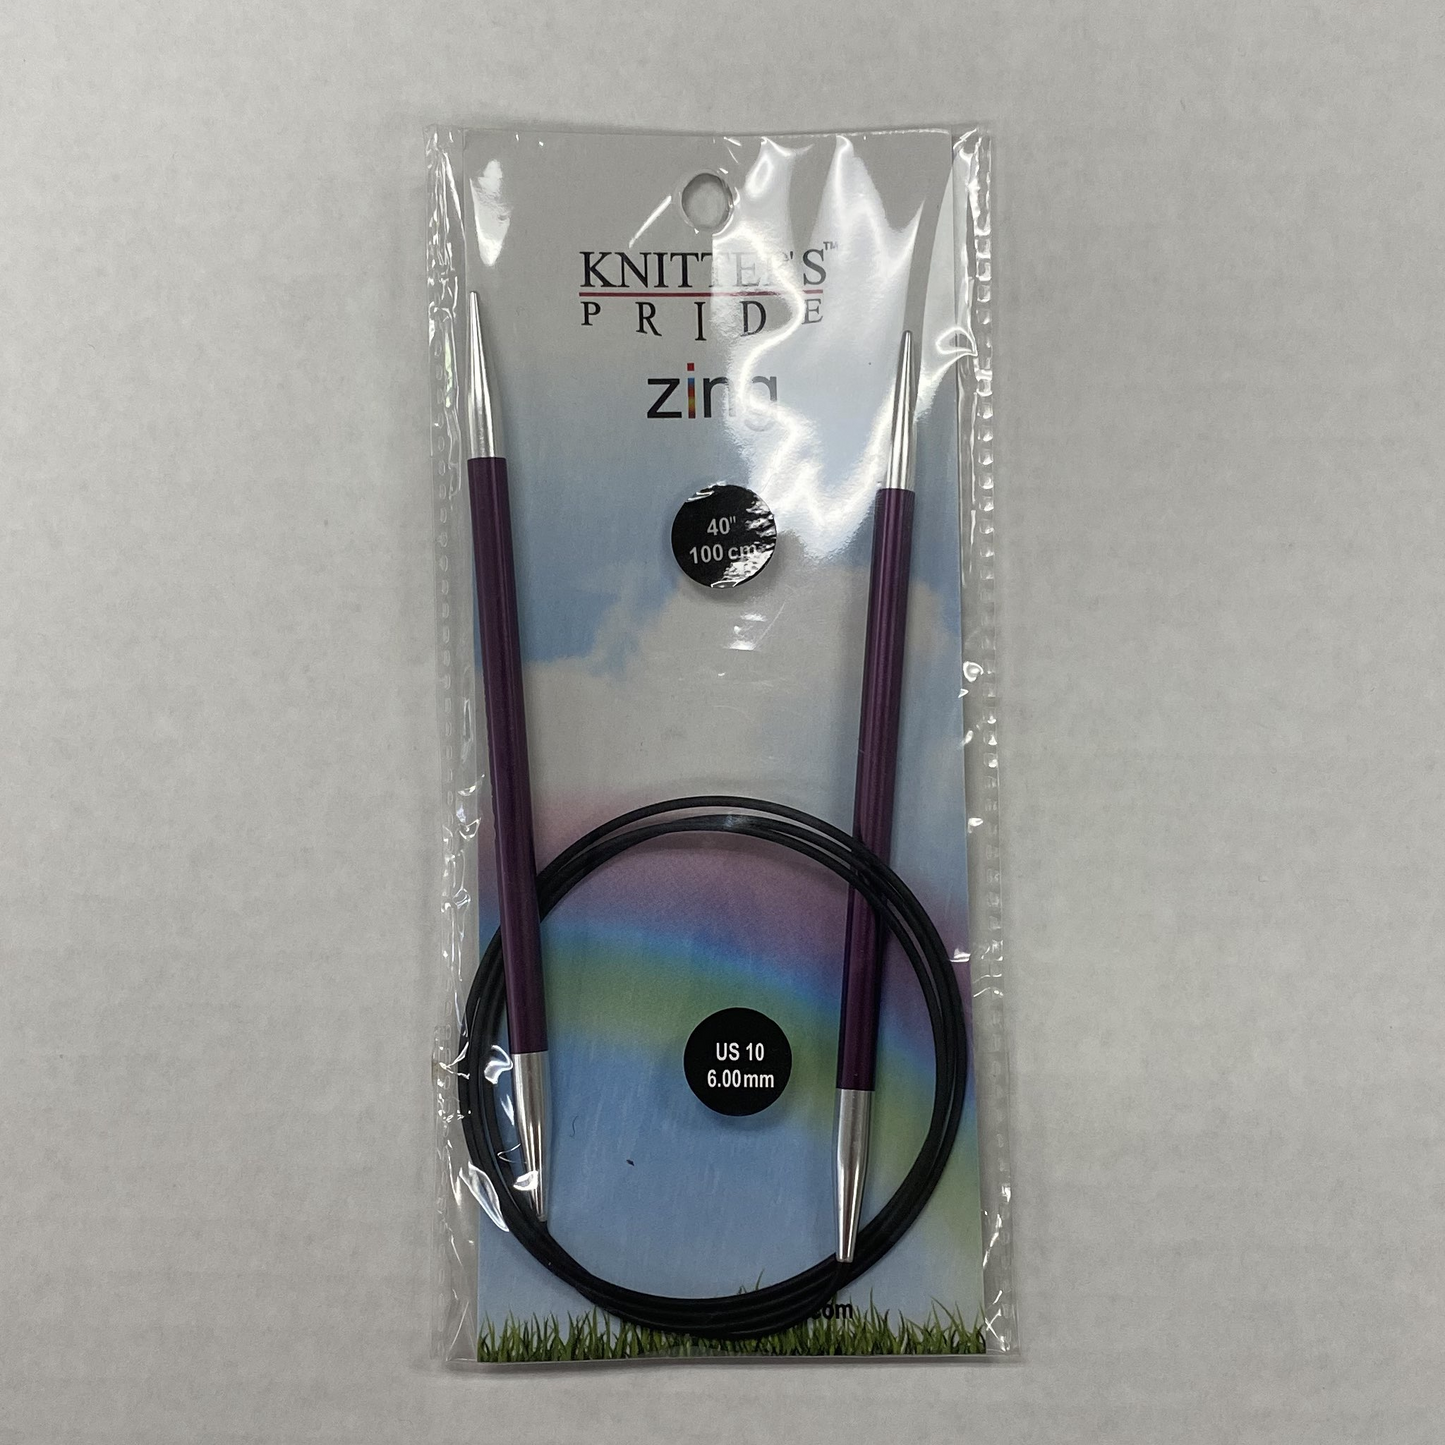 Knitter's Pride - Zing - US 10 / 6.00mm Fixed Circular Needles